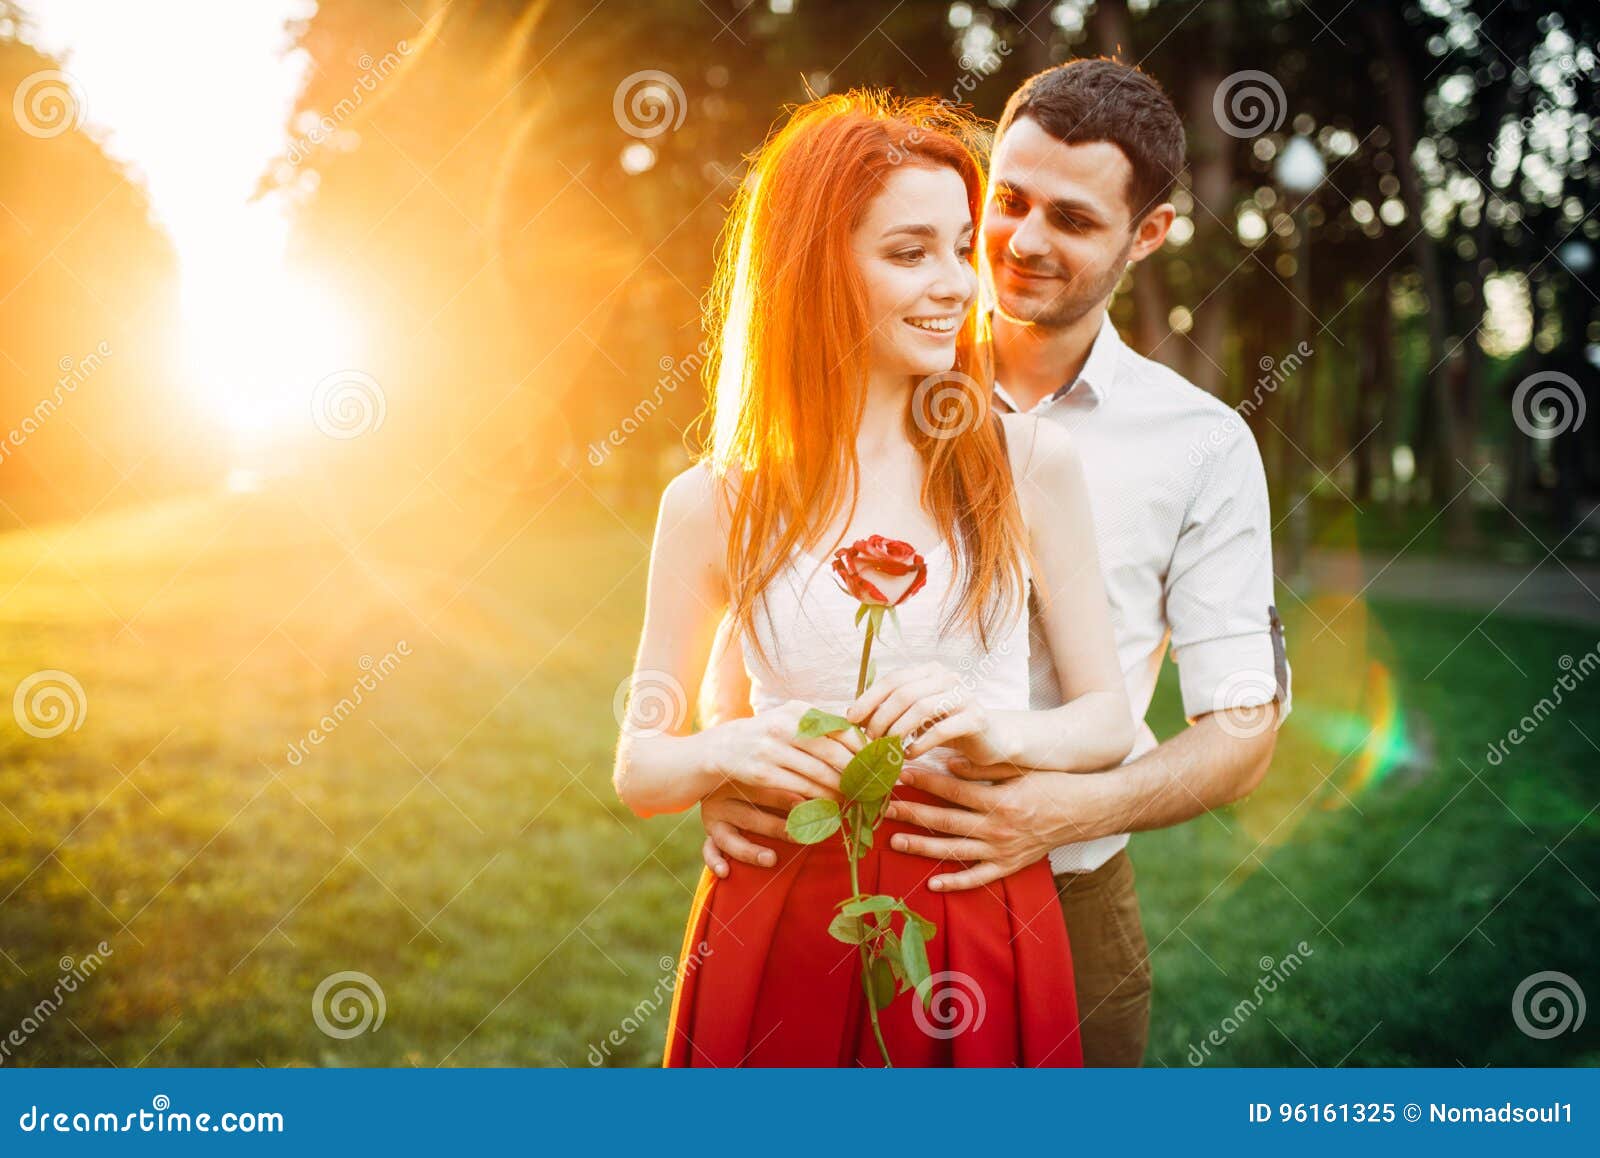 Love Couple Hugs on Sunset, Romantic Meeting Stock Image - Image ...